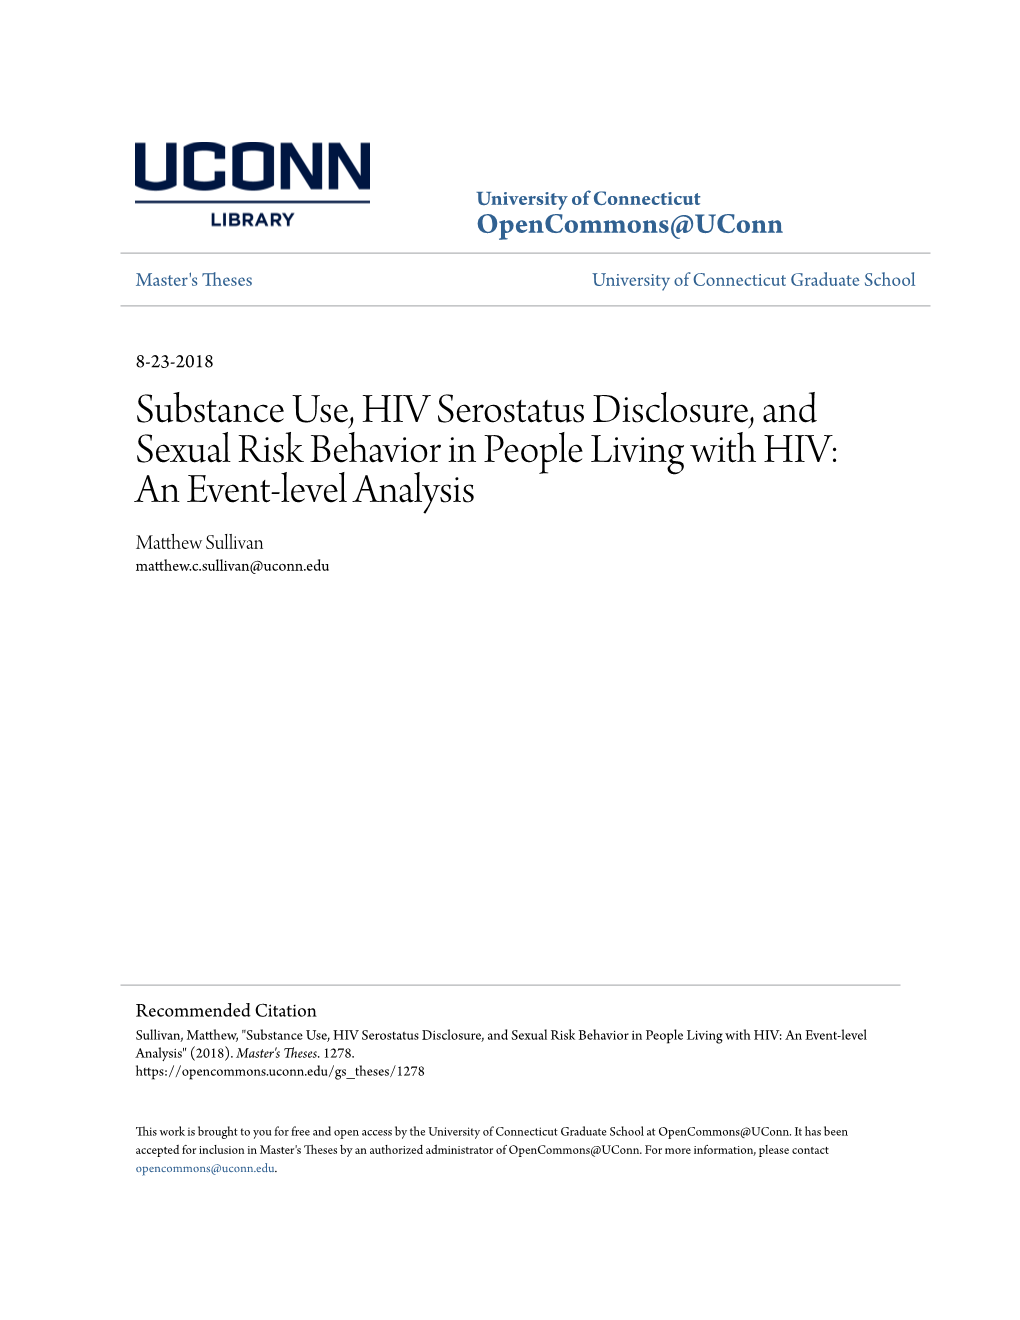 Substance Use, HIV Serostatus Disclosure, and Sexual Risk Behavior in People Living with HIV: an Event-Level Analysis Matthew Uls Livan Matthew.C.Sullivan@Uconn.Edu